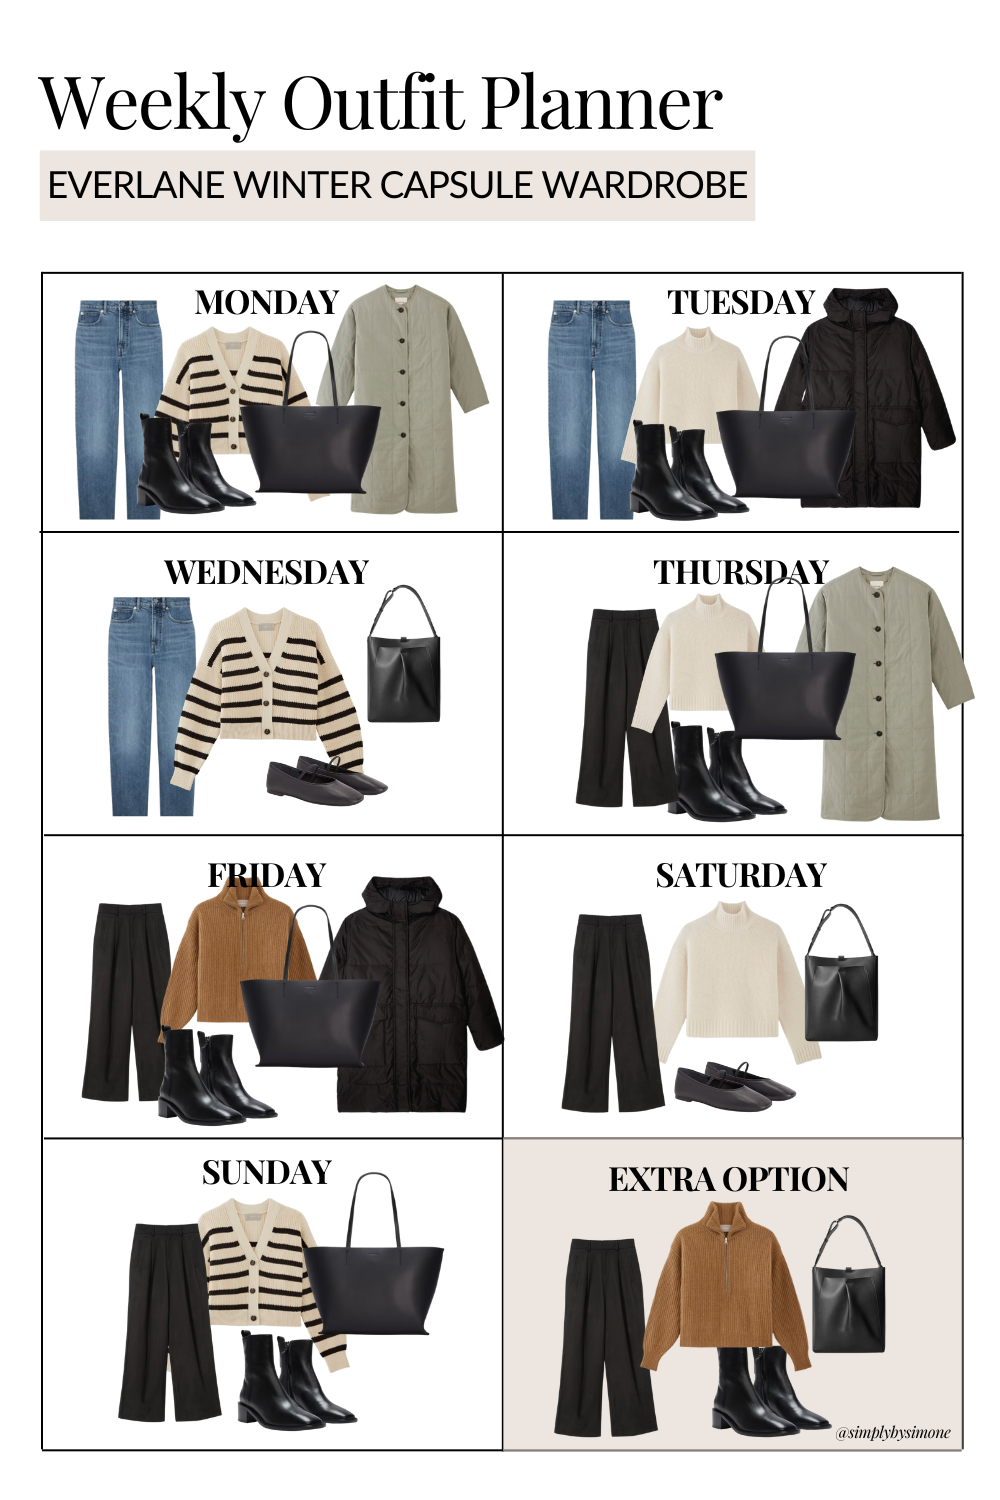 Winter Capsule Wardrobe Weekly outfit planner